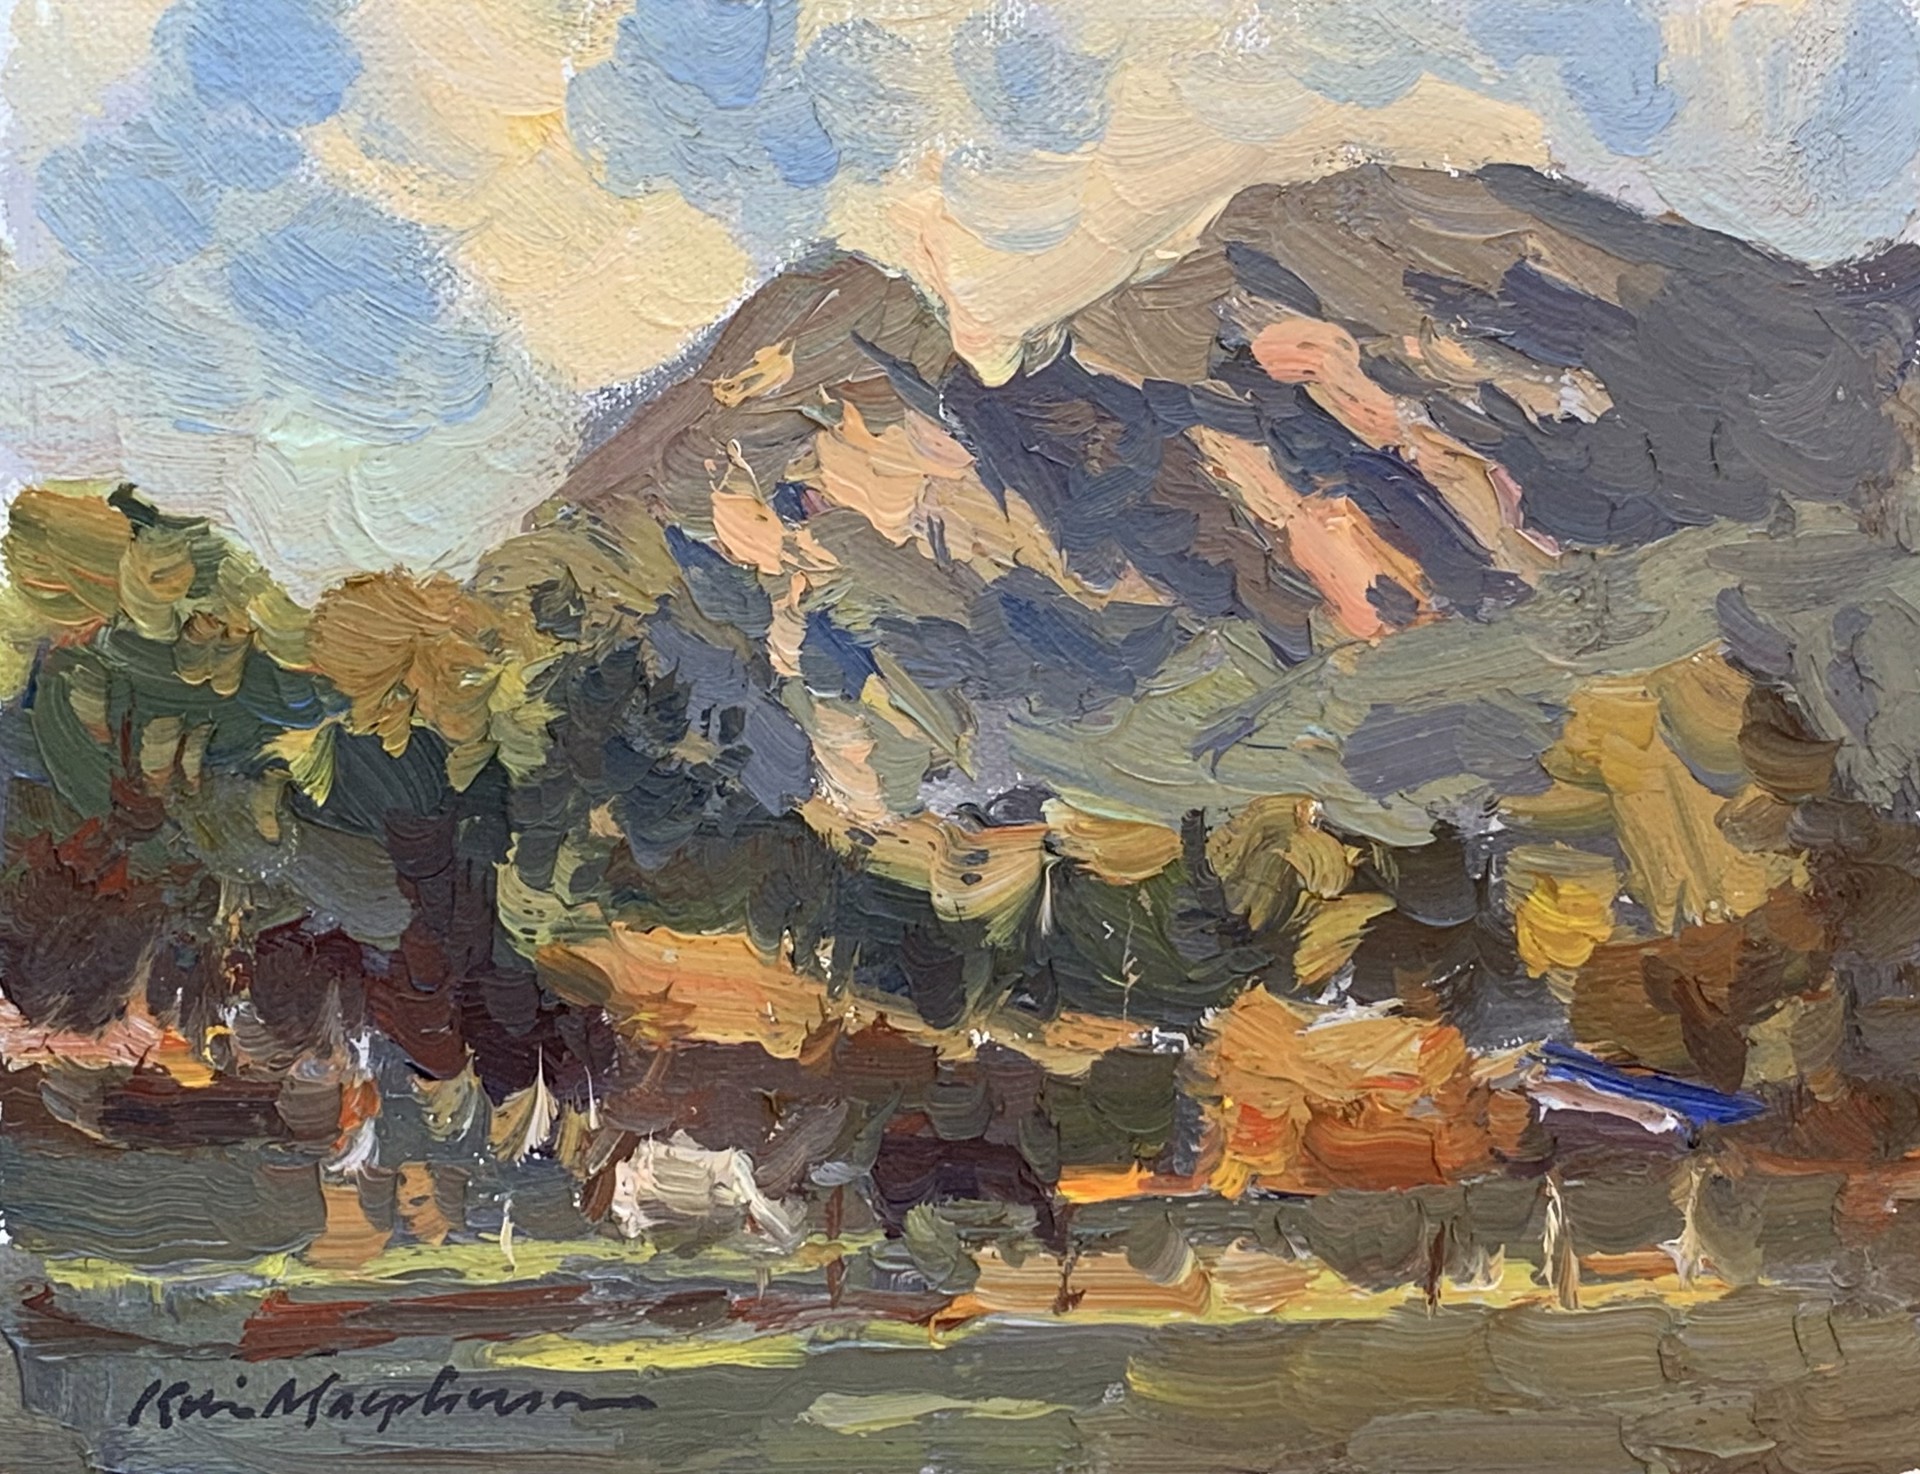 Taos Mtn (Pochade Box) by Kevin Macpherson